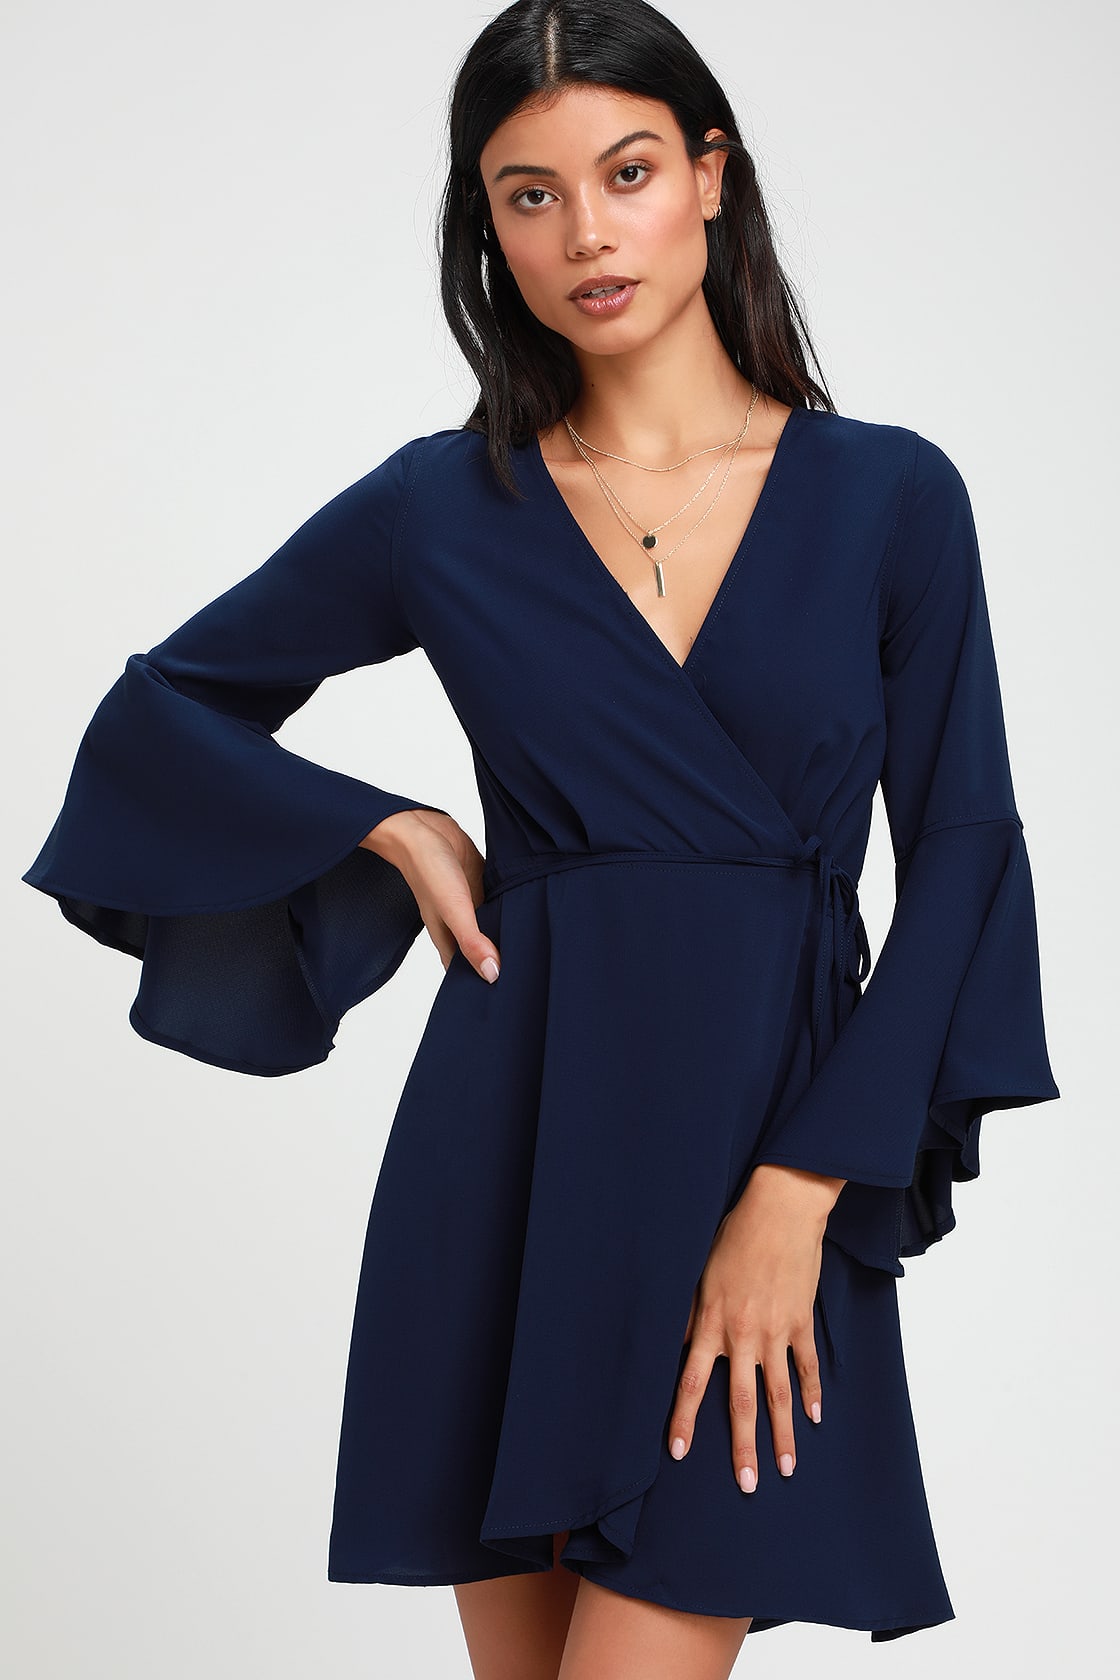 Chic Navy Blue Dress - Wrap Dress - Flounce Sleeve Dress - Lulus